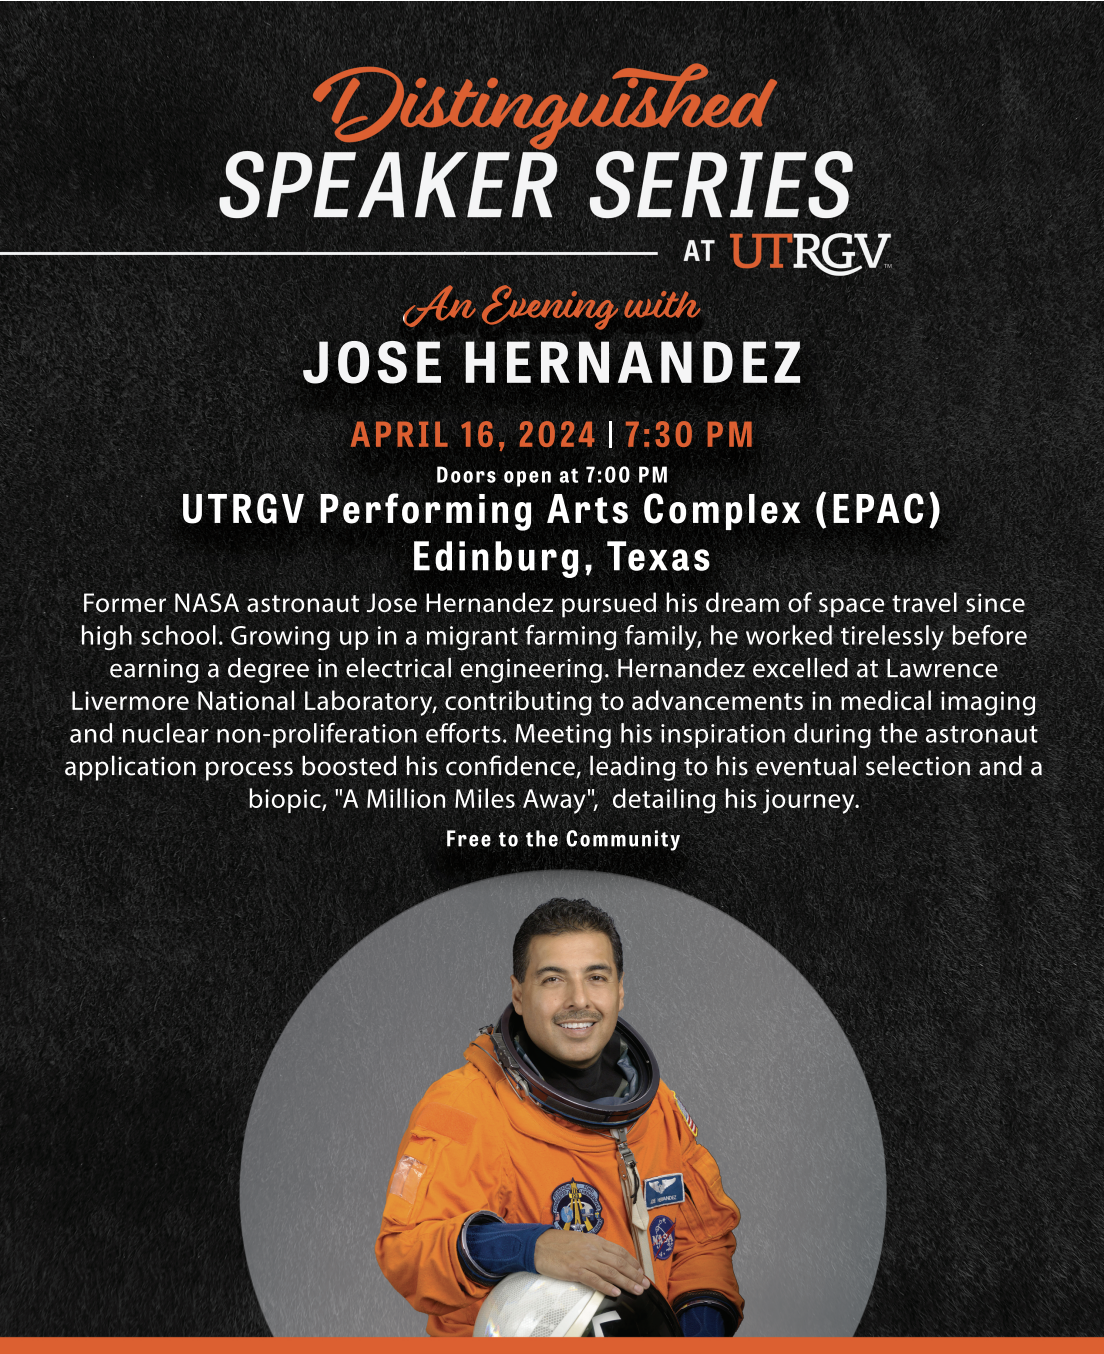 Former NASA Astronaut Jose Hernandez  to speak at UTRGV Distinguished Speaker Series 